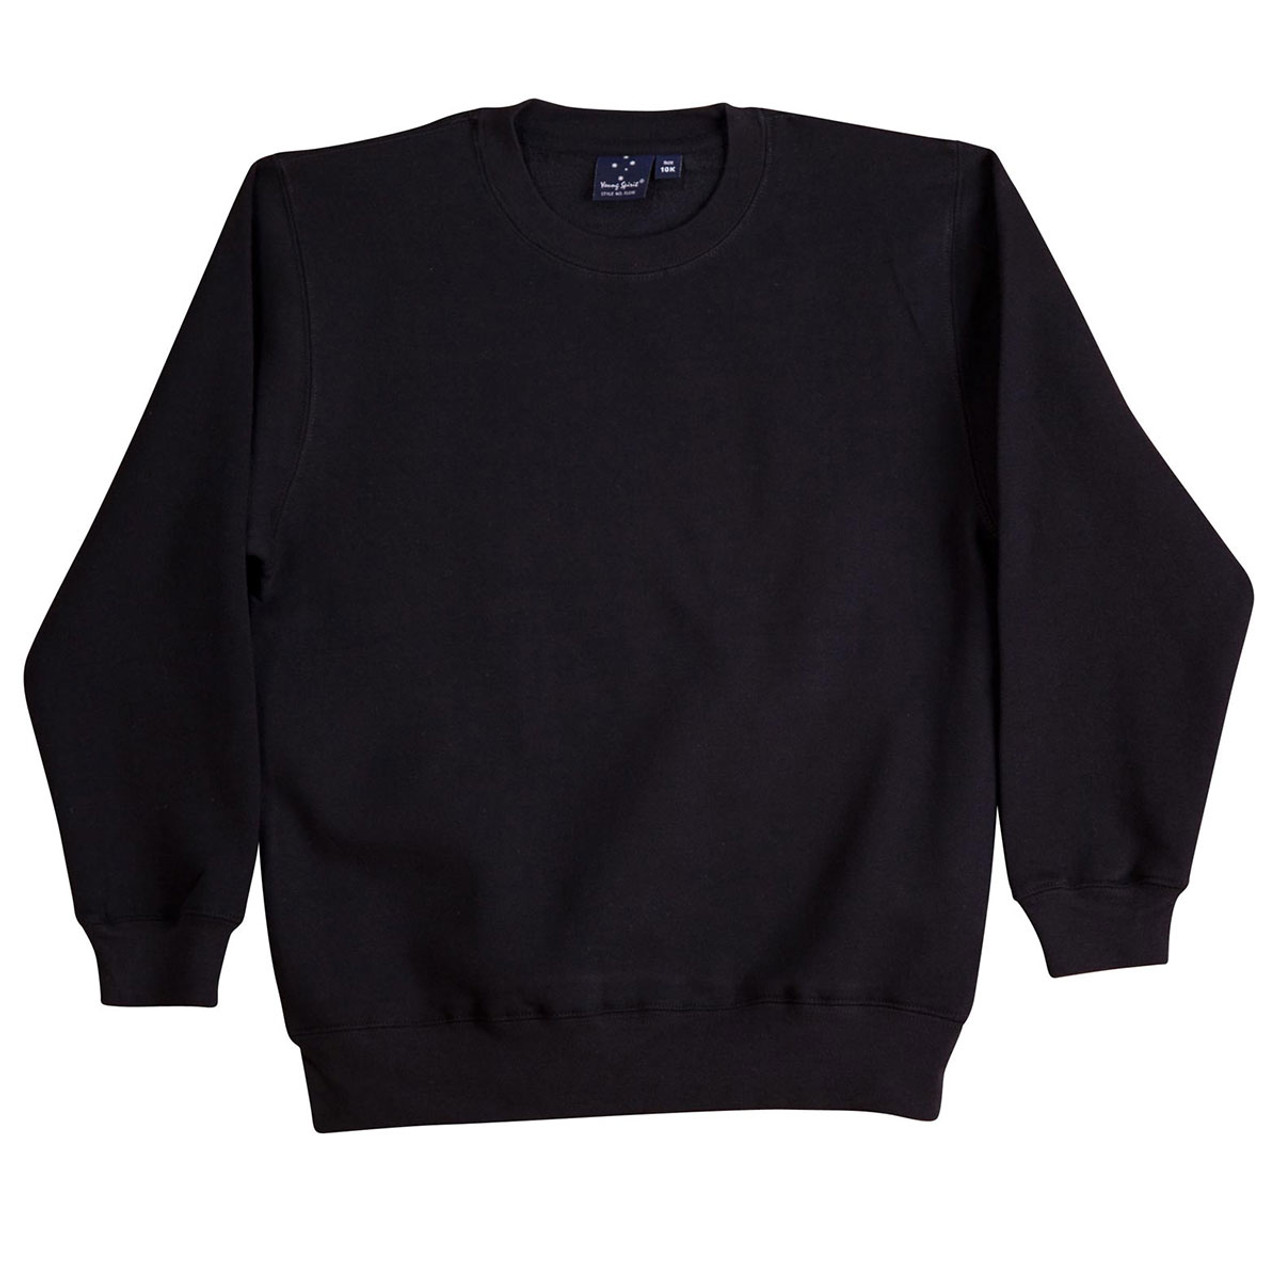 Sloppy joes plain cotton-rich sweater | Plus Size Jumper Pullovers Online